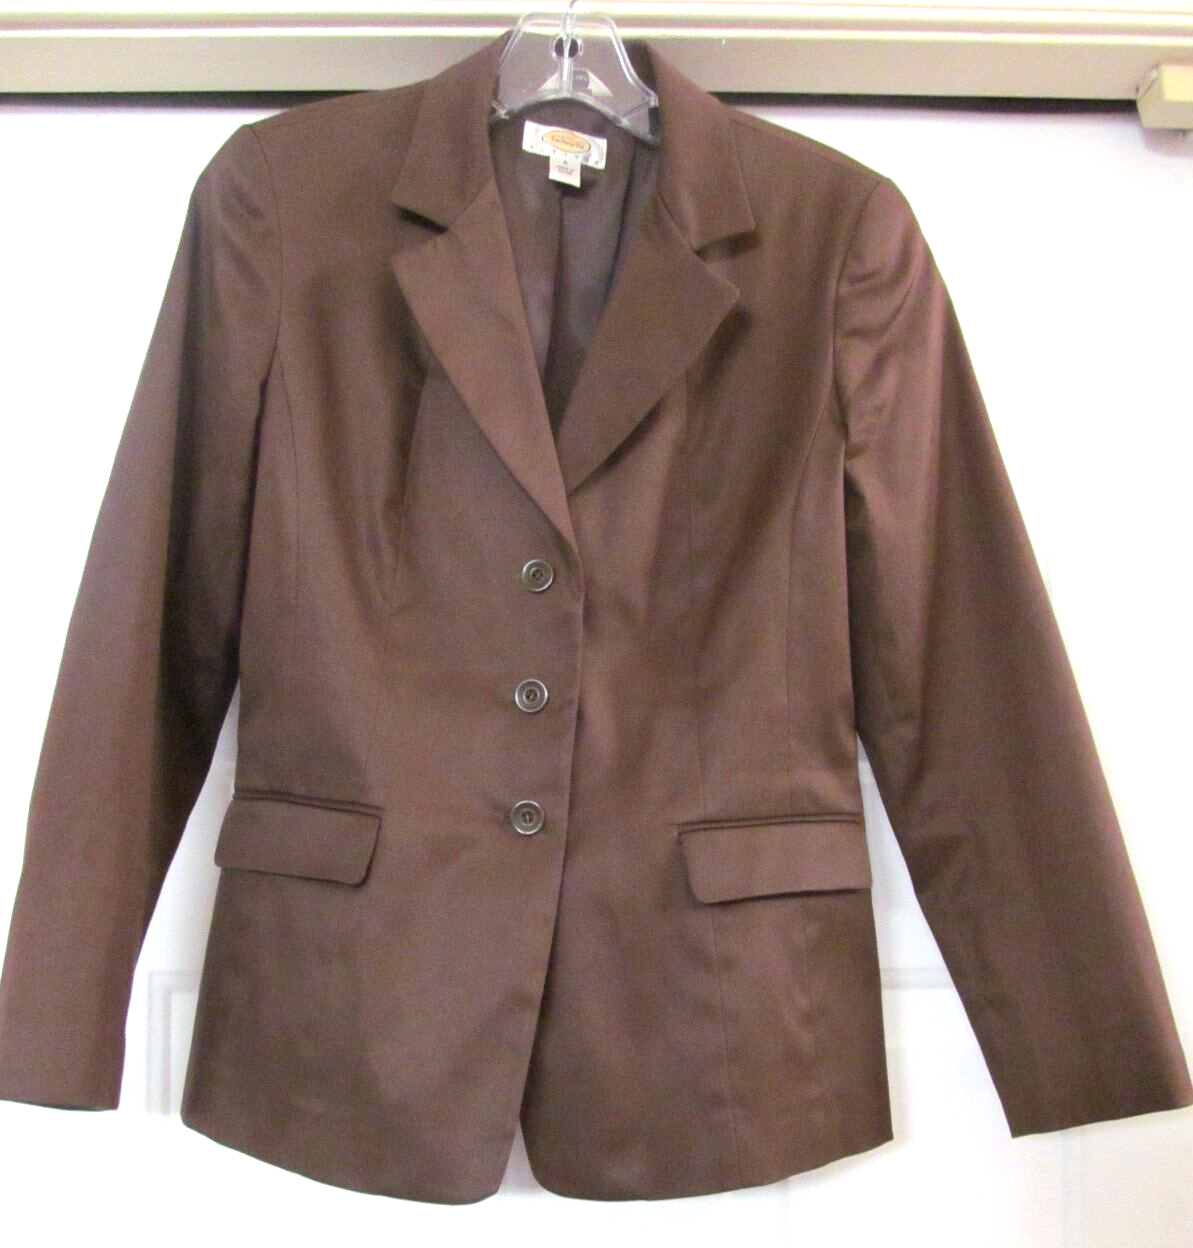 Primary image for TALBOTS Blazer Jacket Coat Silk Blend 3 BUTTON Brown Women's Size 4 